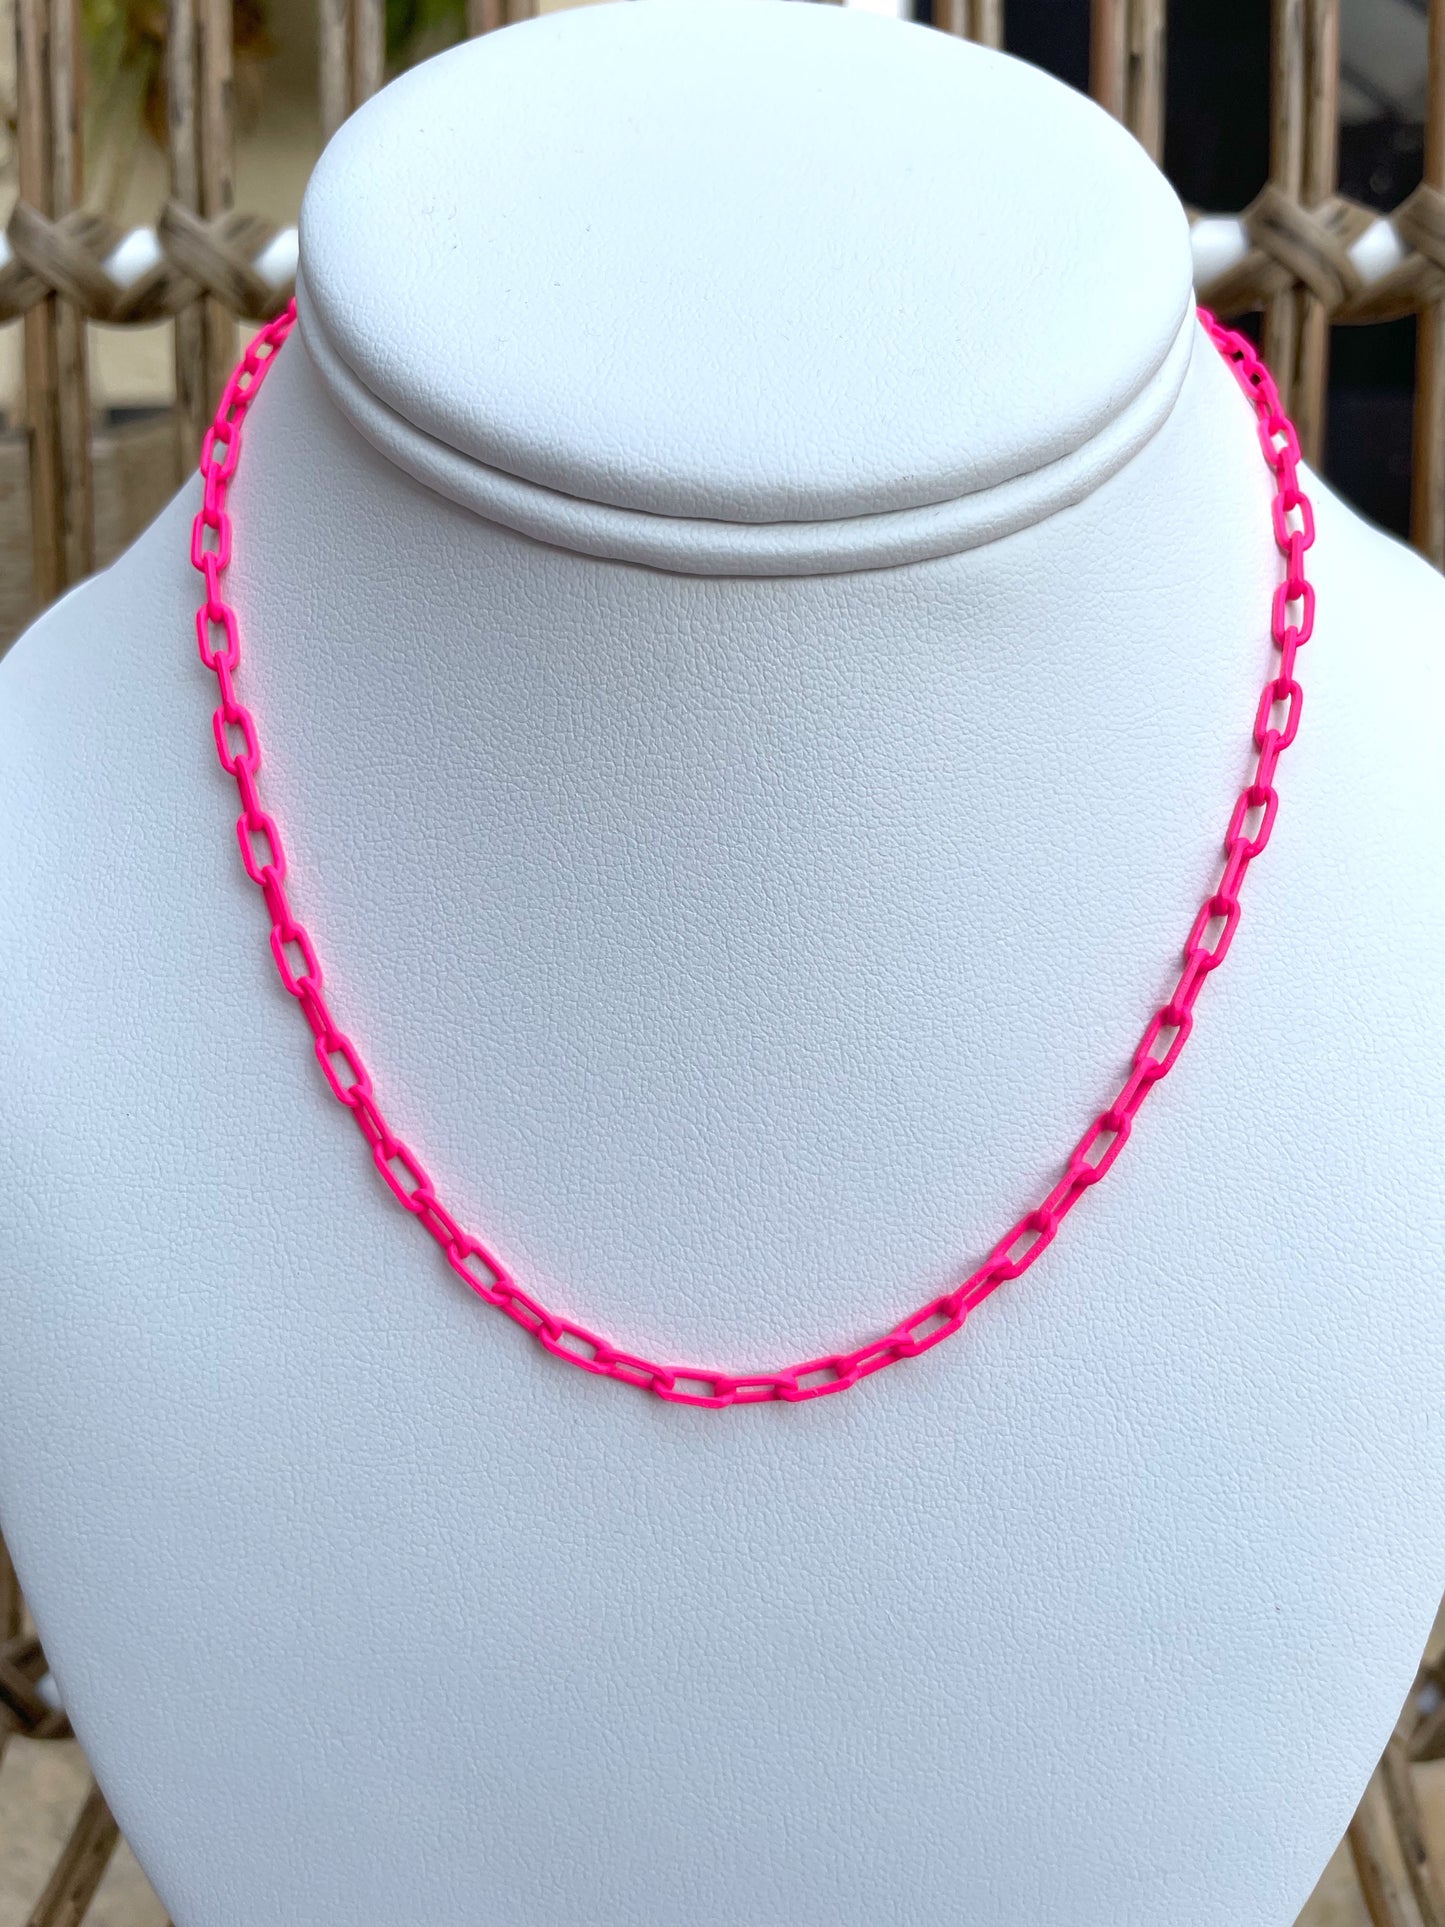 Colored paper clip necklaces